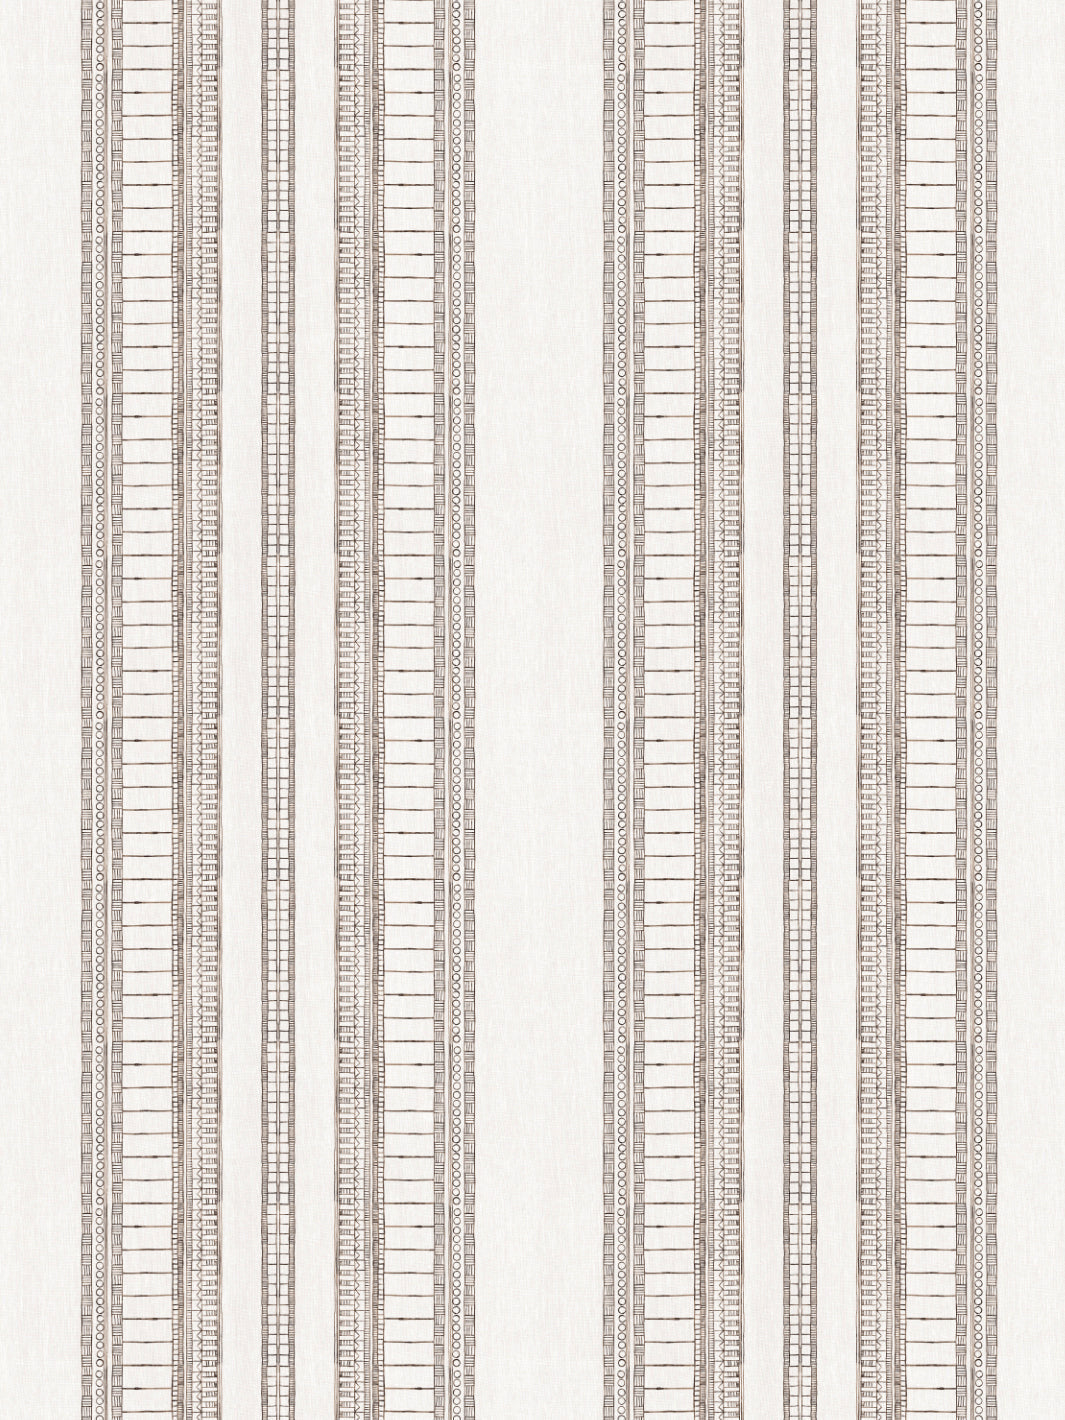 'Doodle Stripe' Wallpaper by Nathan Turner - Brown